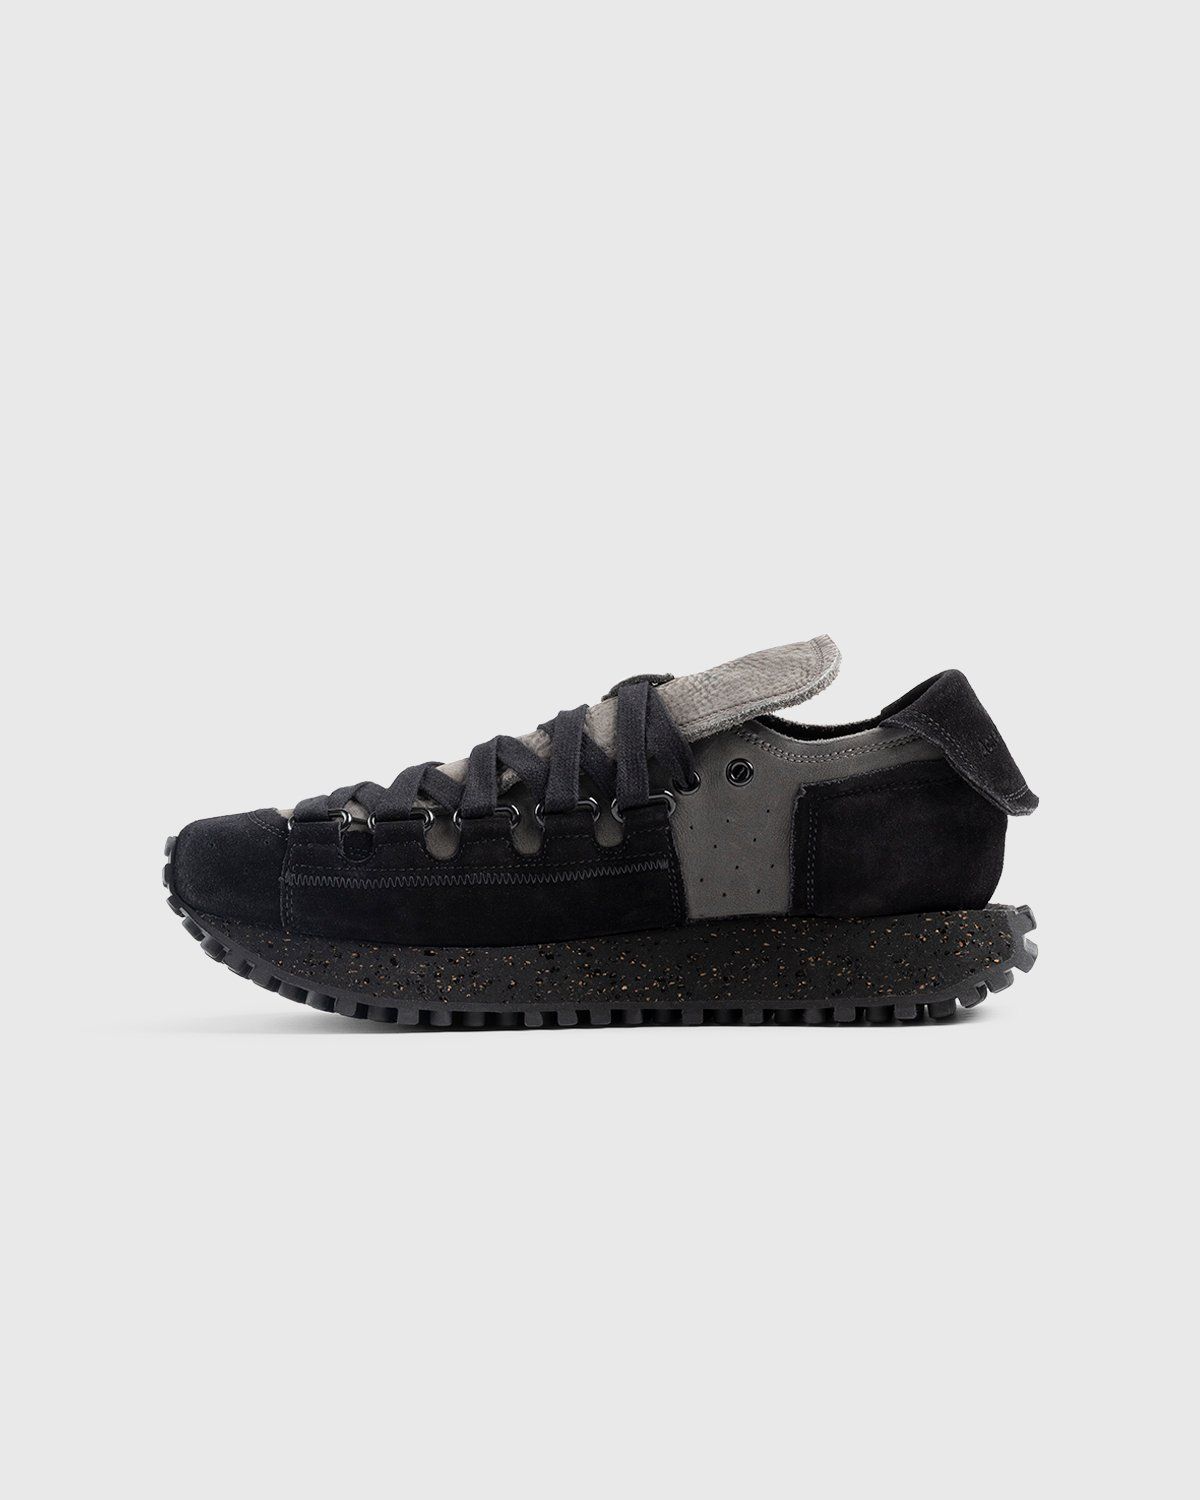 Acne Studios – Nofo Lace-Up Sneakers Grey/Black - Low Top Sneakers - Black - Image 2